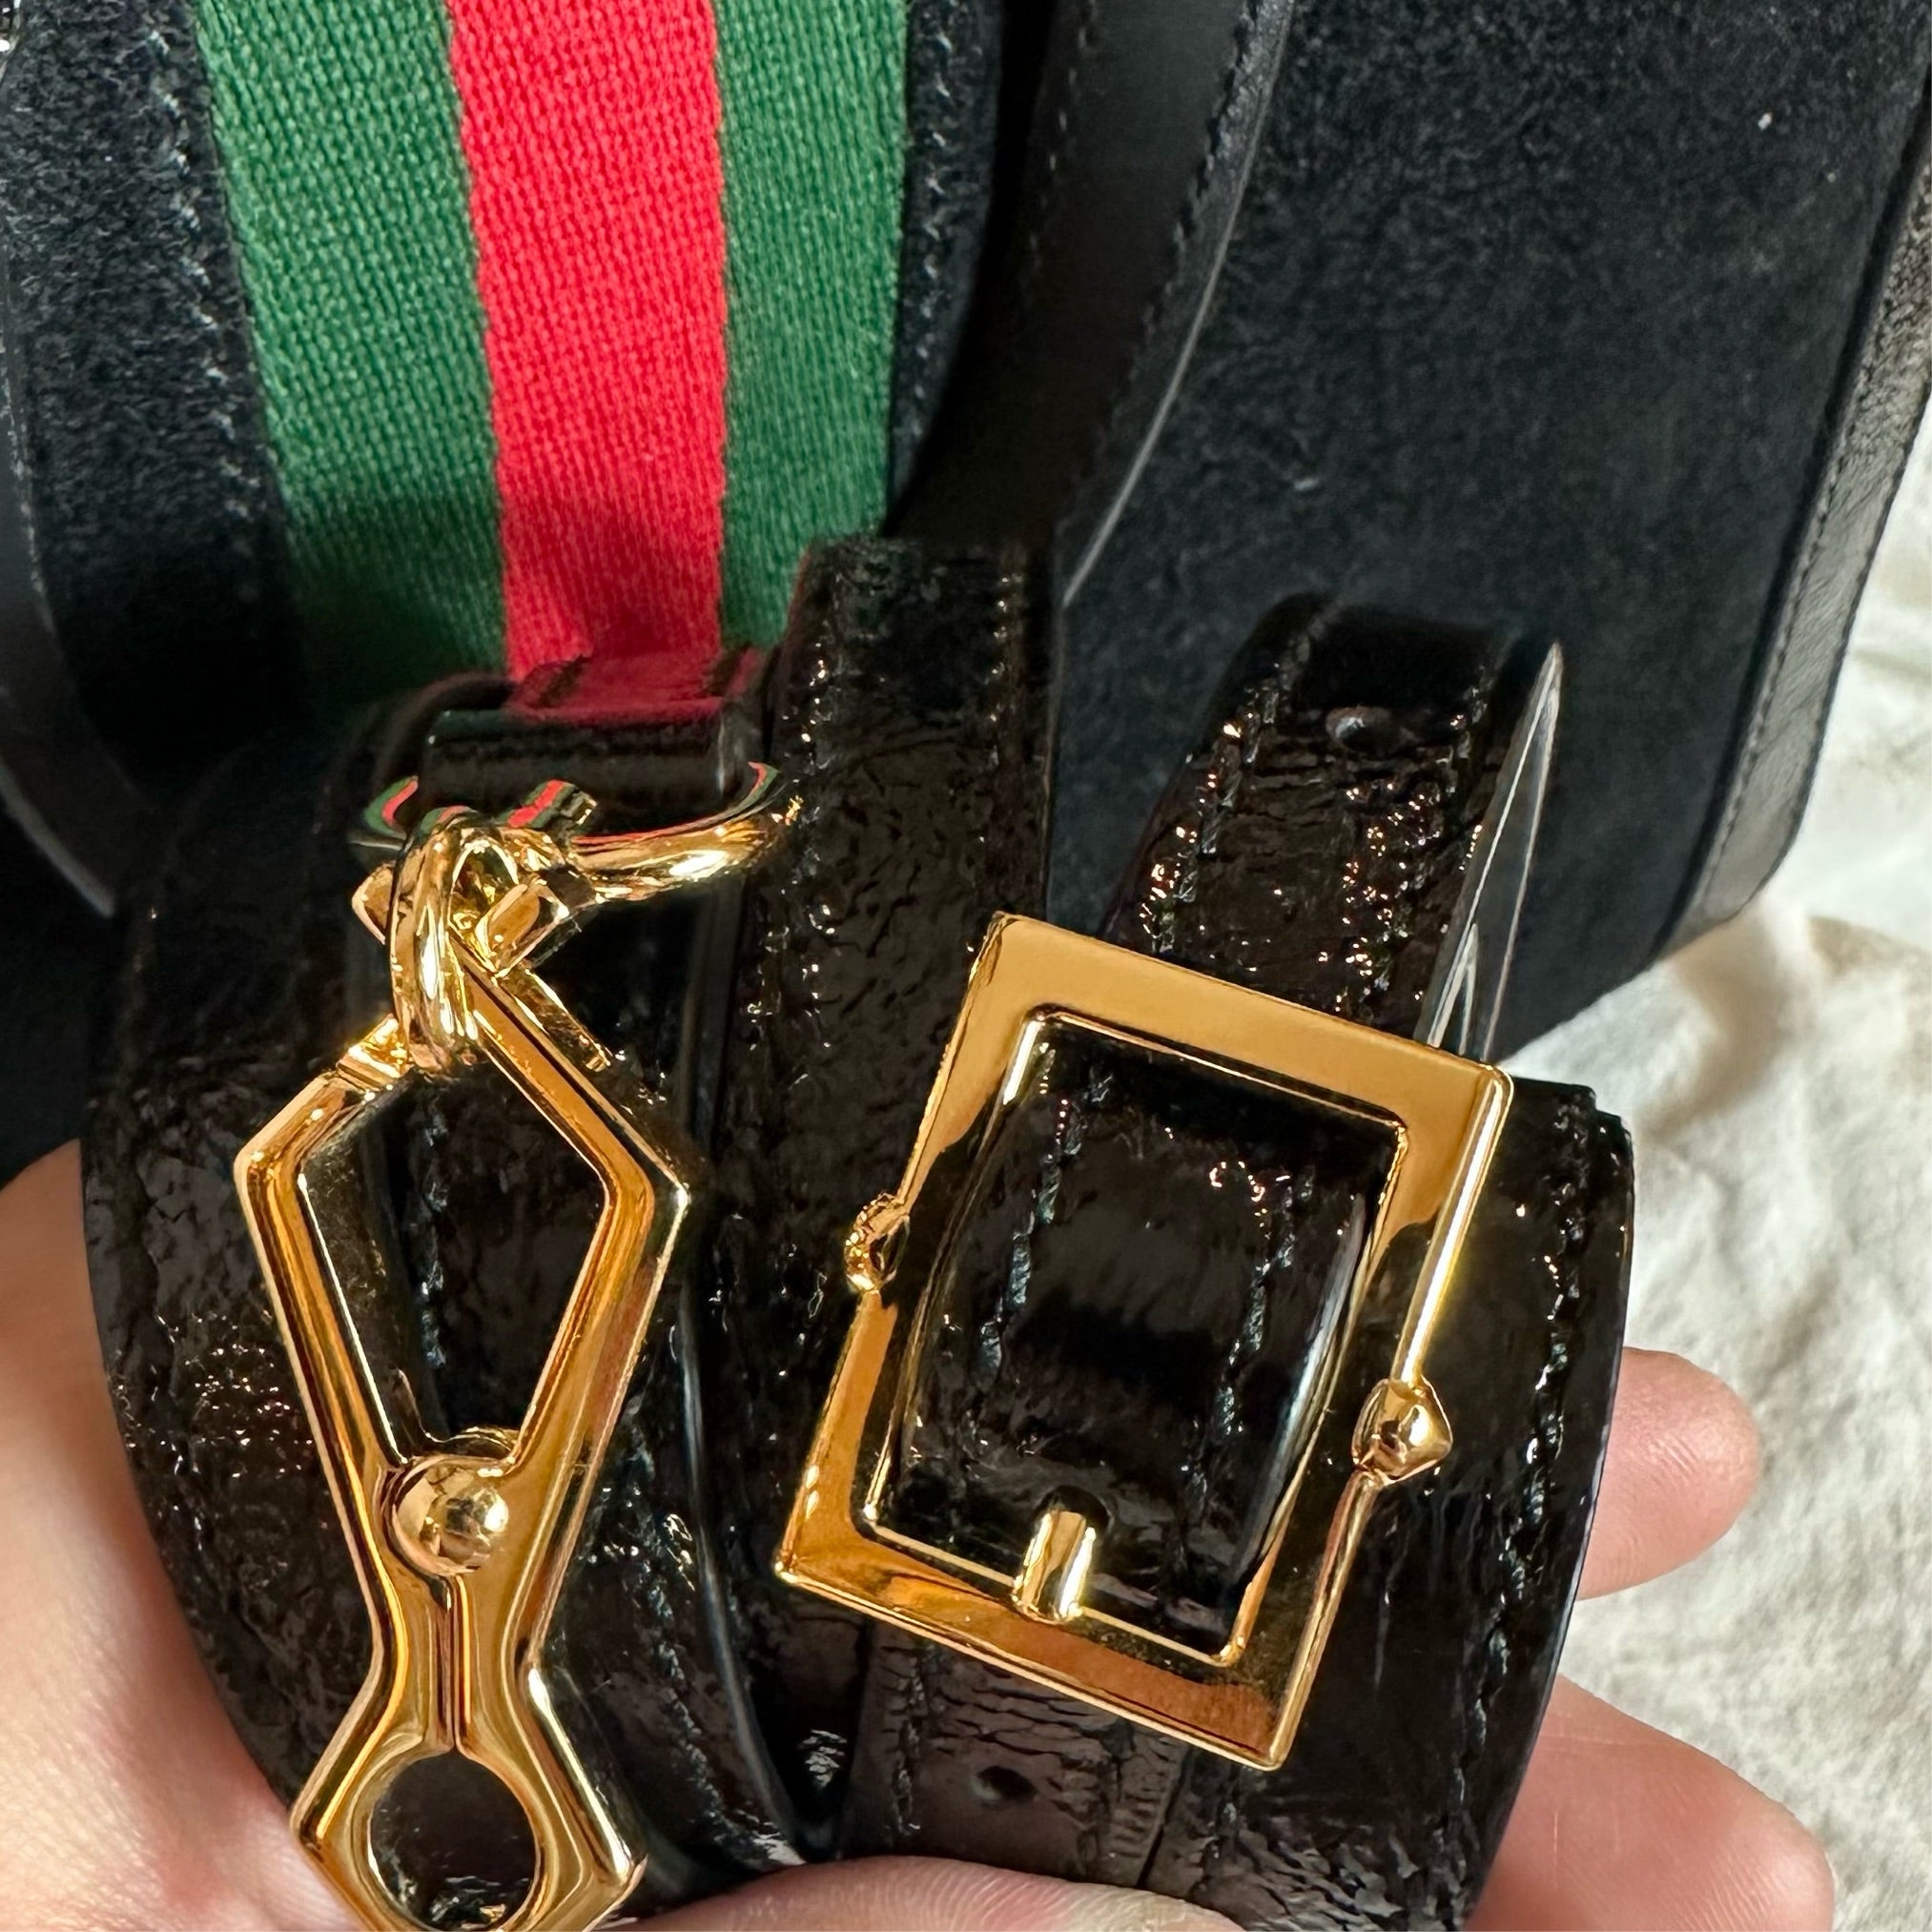 Gucci Medium Ophidia Tote Bag in Black